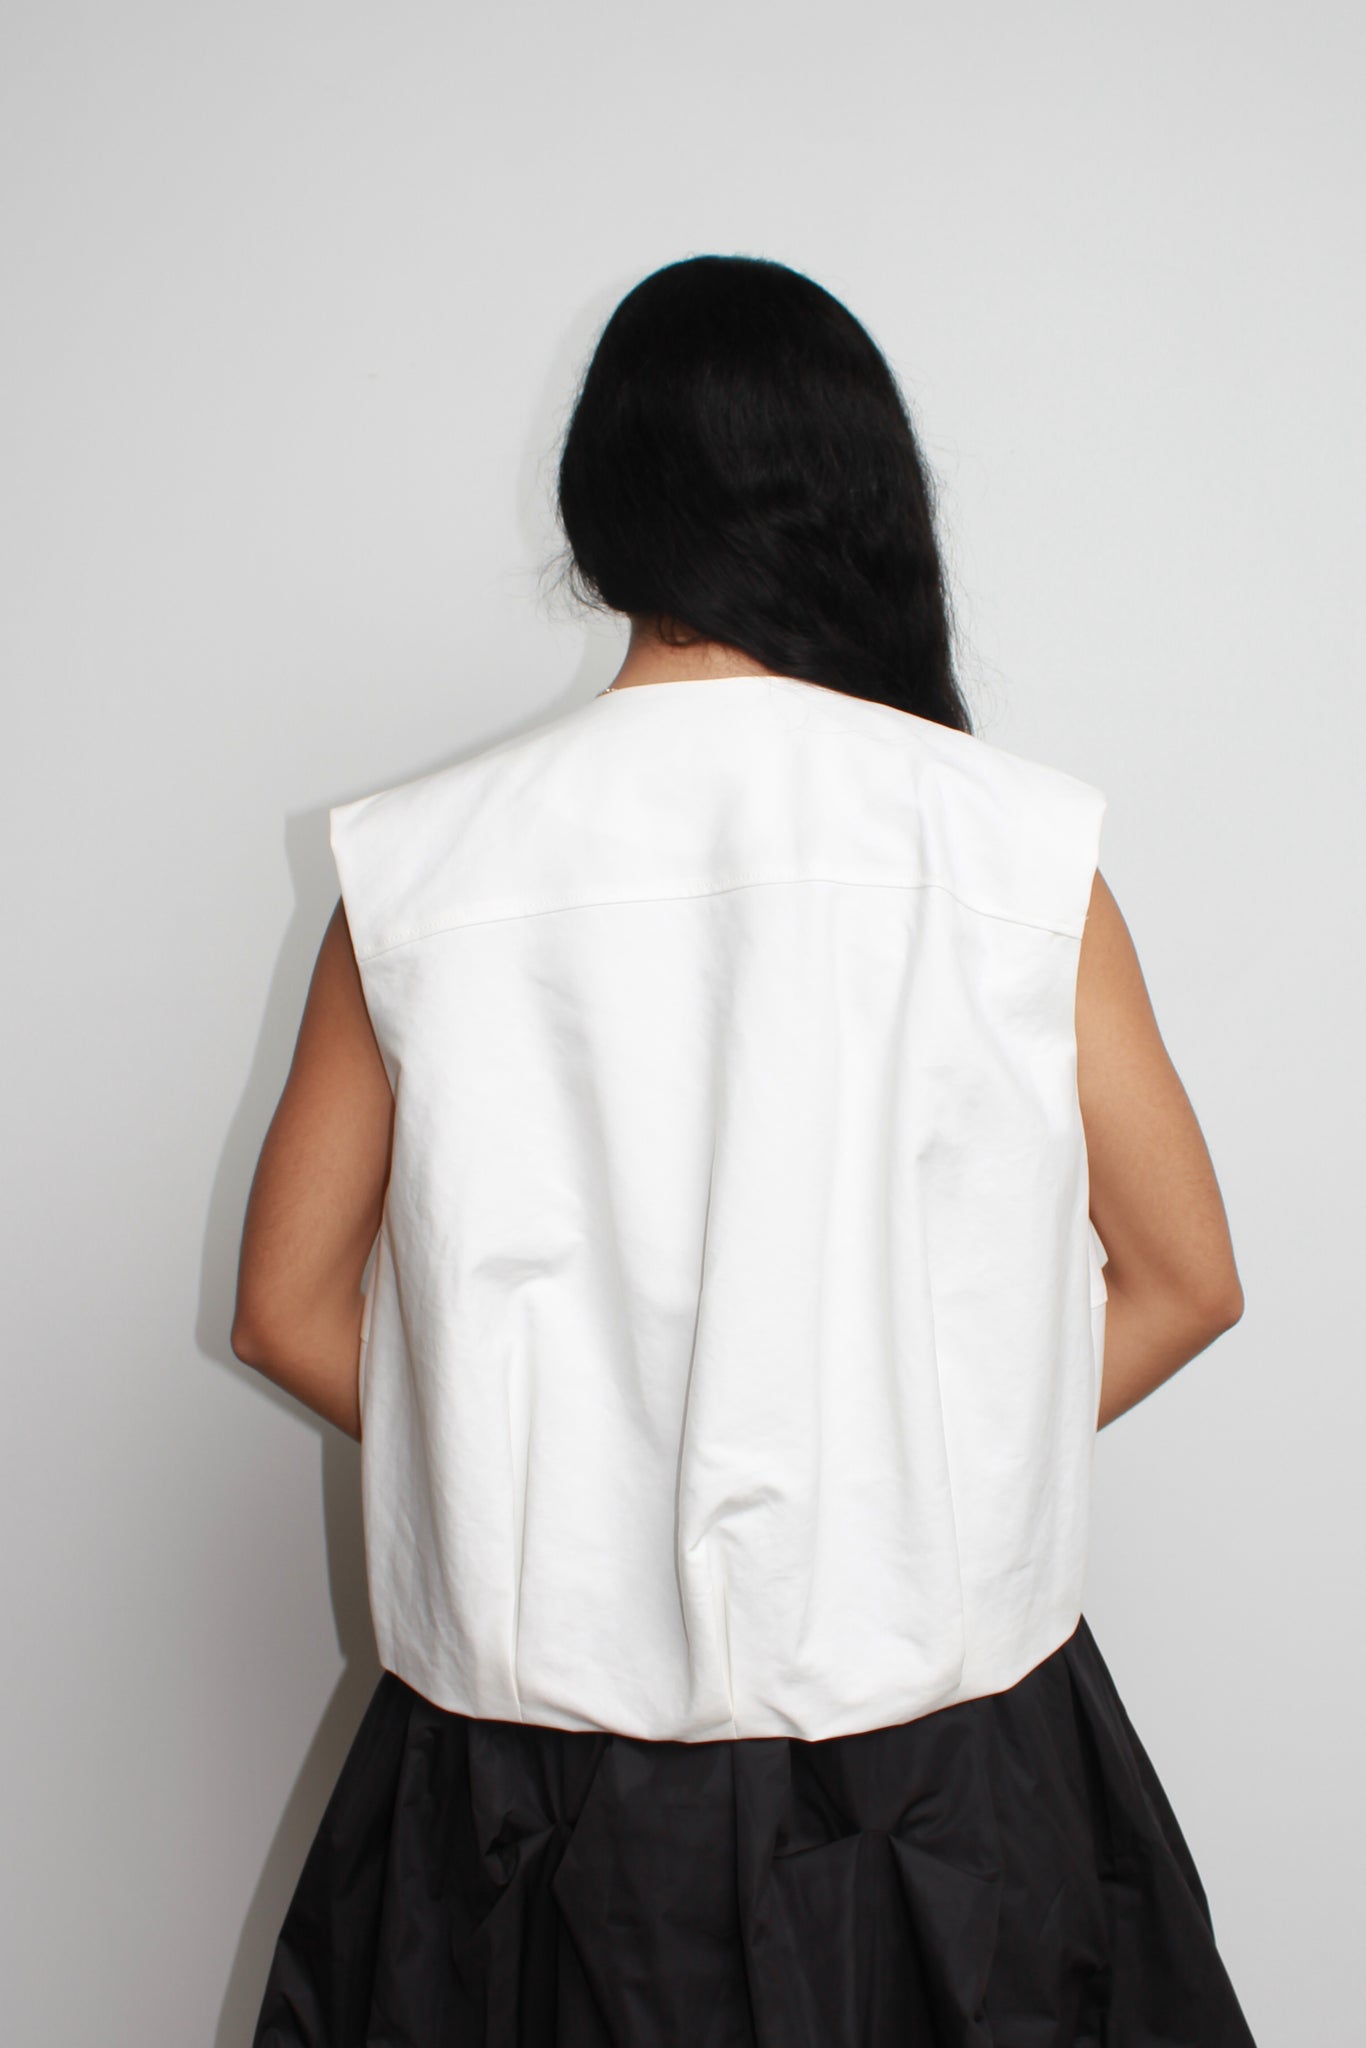 Eden Pocket Vest in White